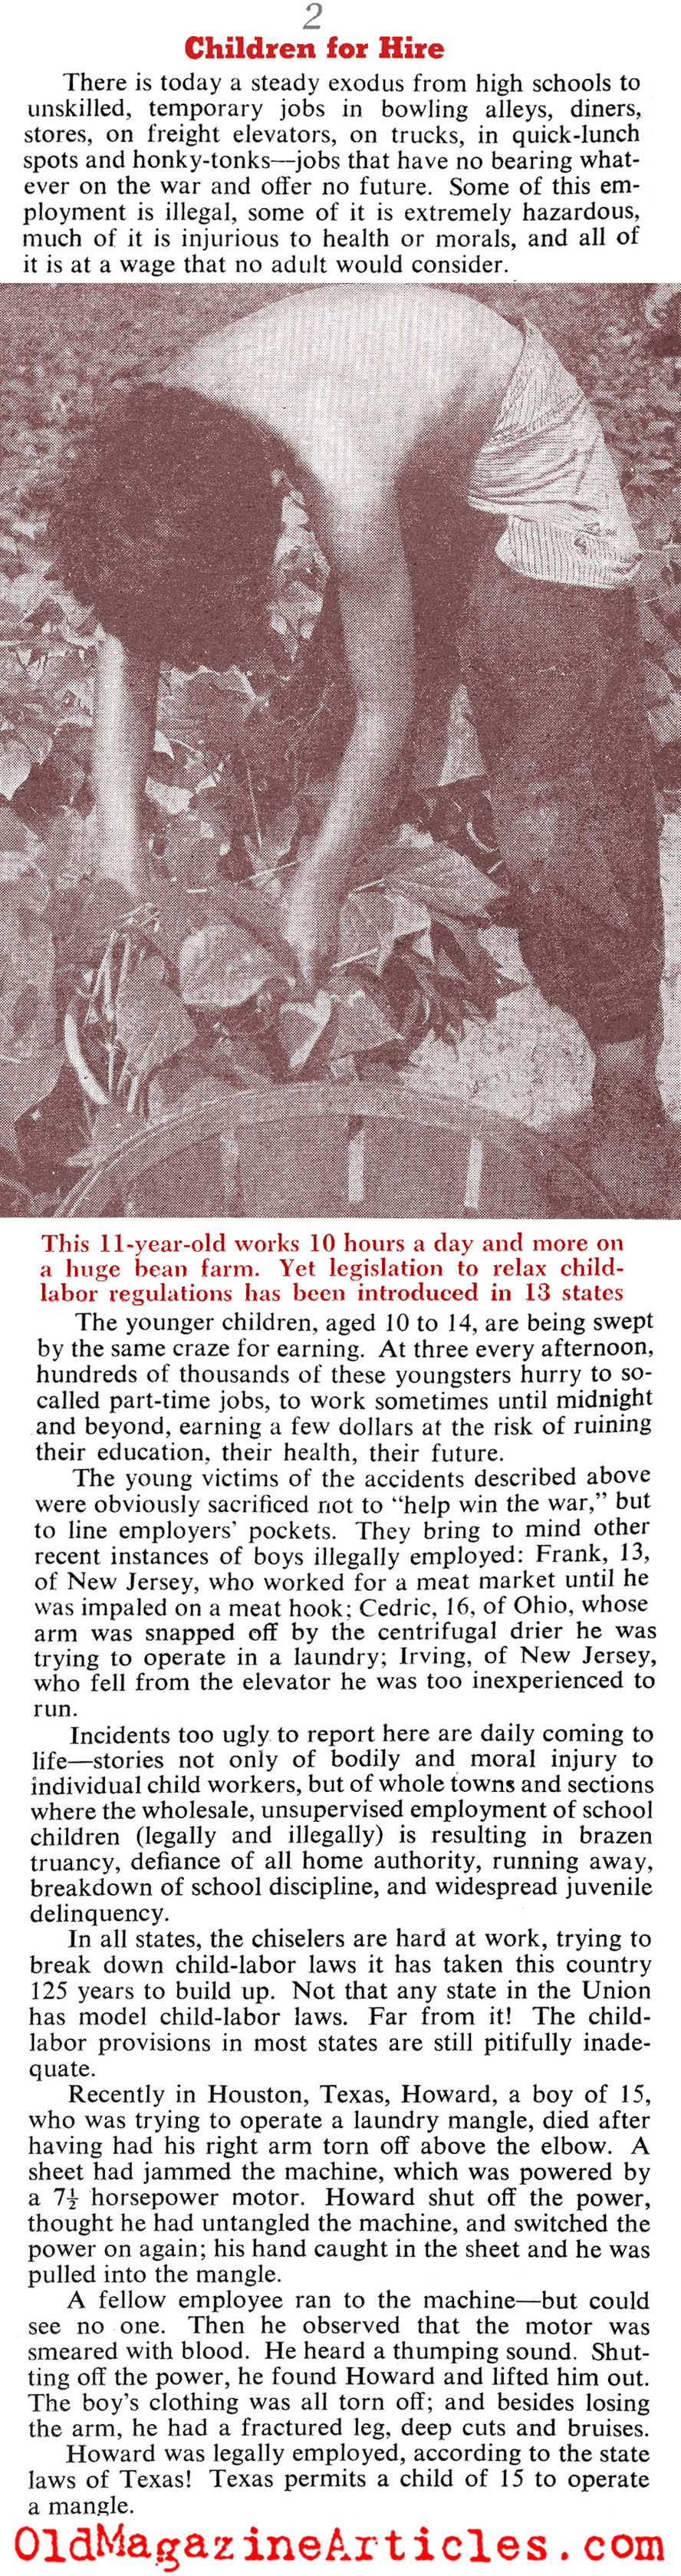 Child Labor During W.W. II (Collier's Magazine, 1943)